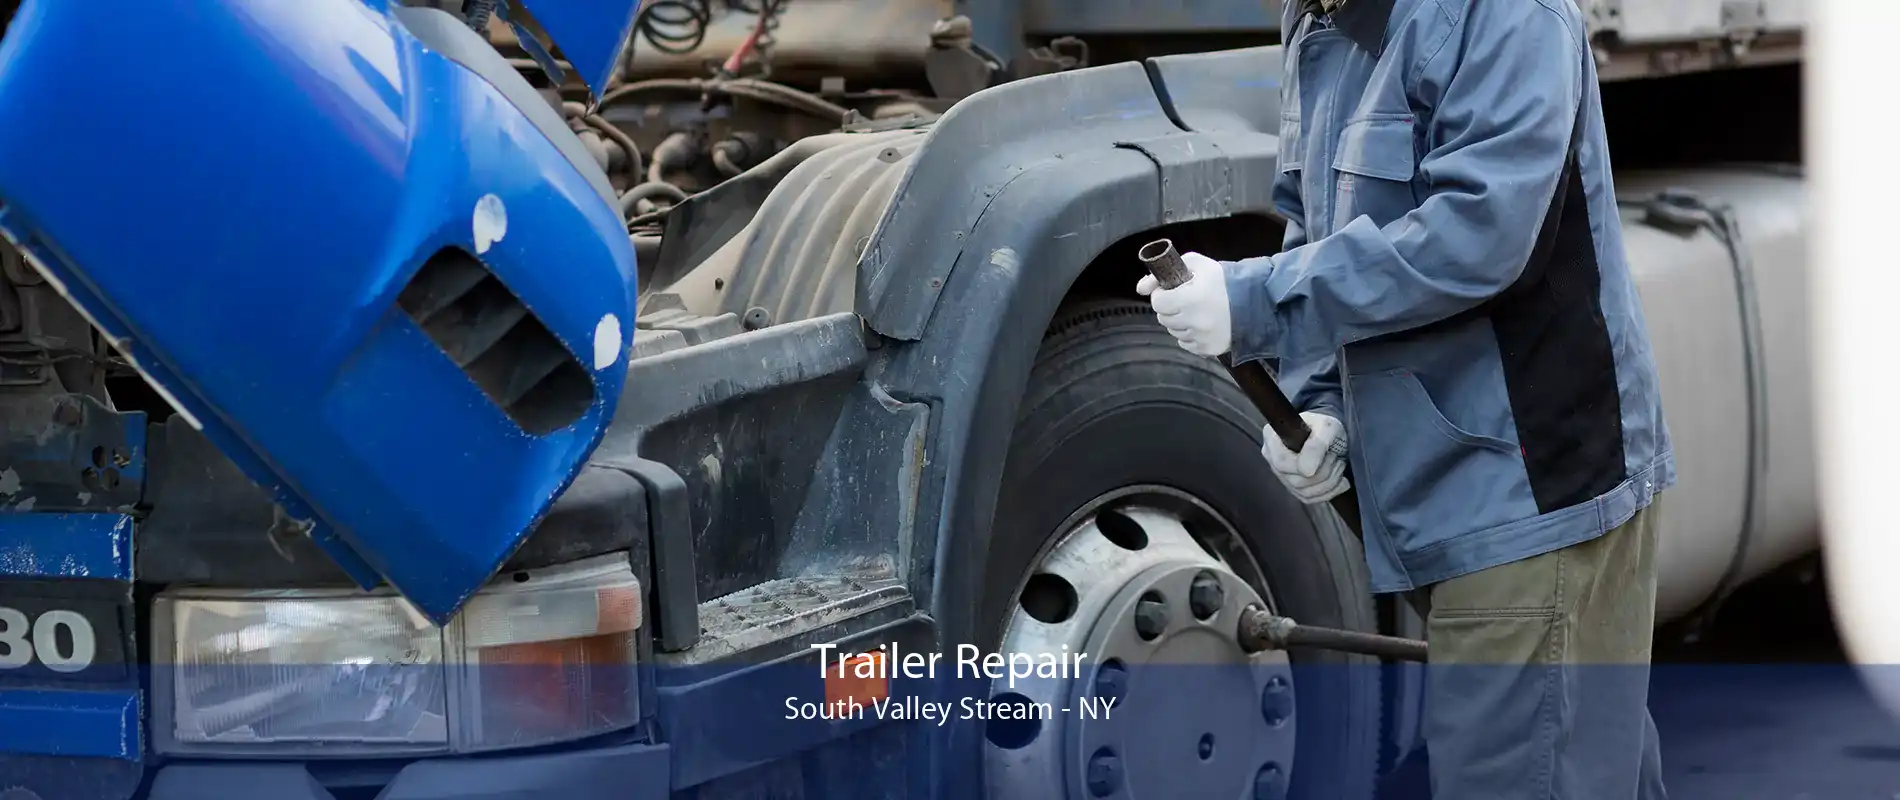 Trailer Repair South Valley Stream - NY